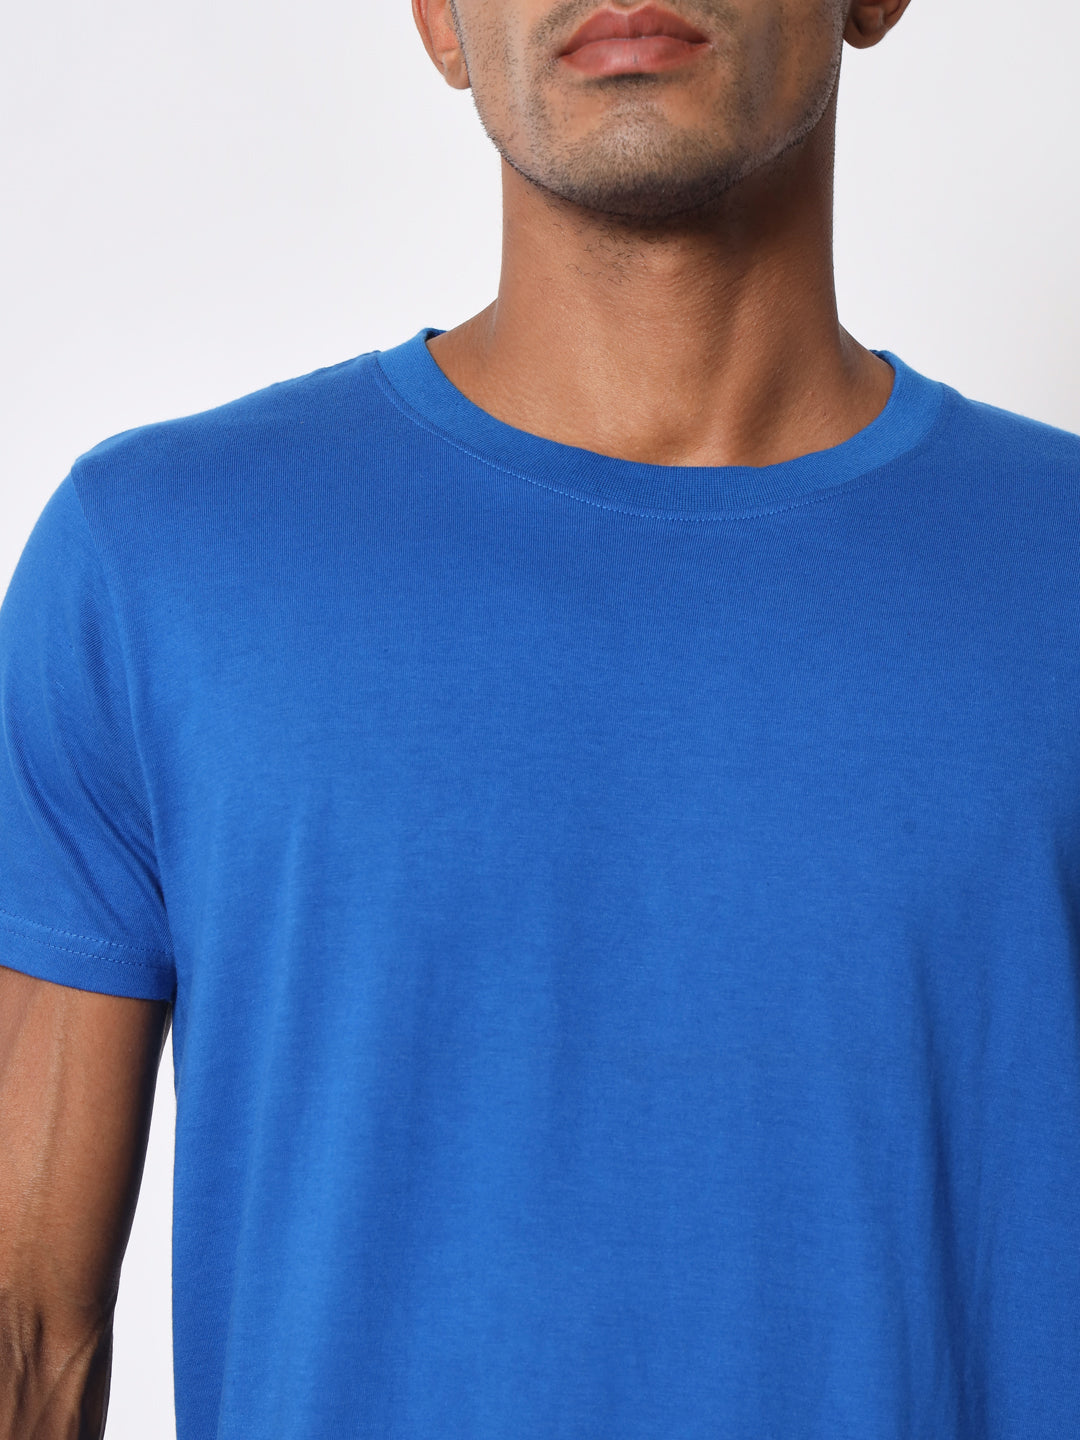 Royal Blue Solid Round Neck Half Sleeve Men's Cotton T-shirt